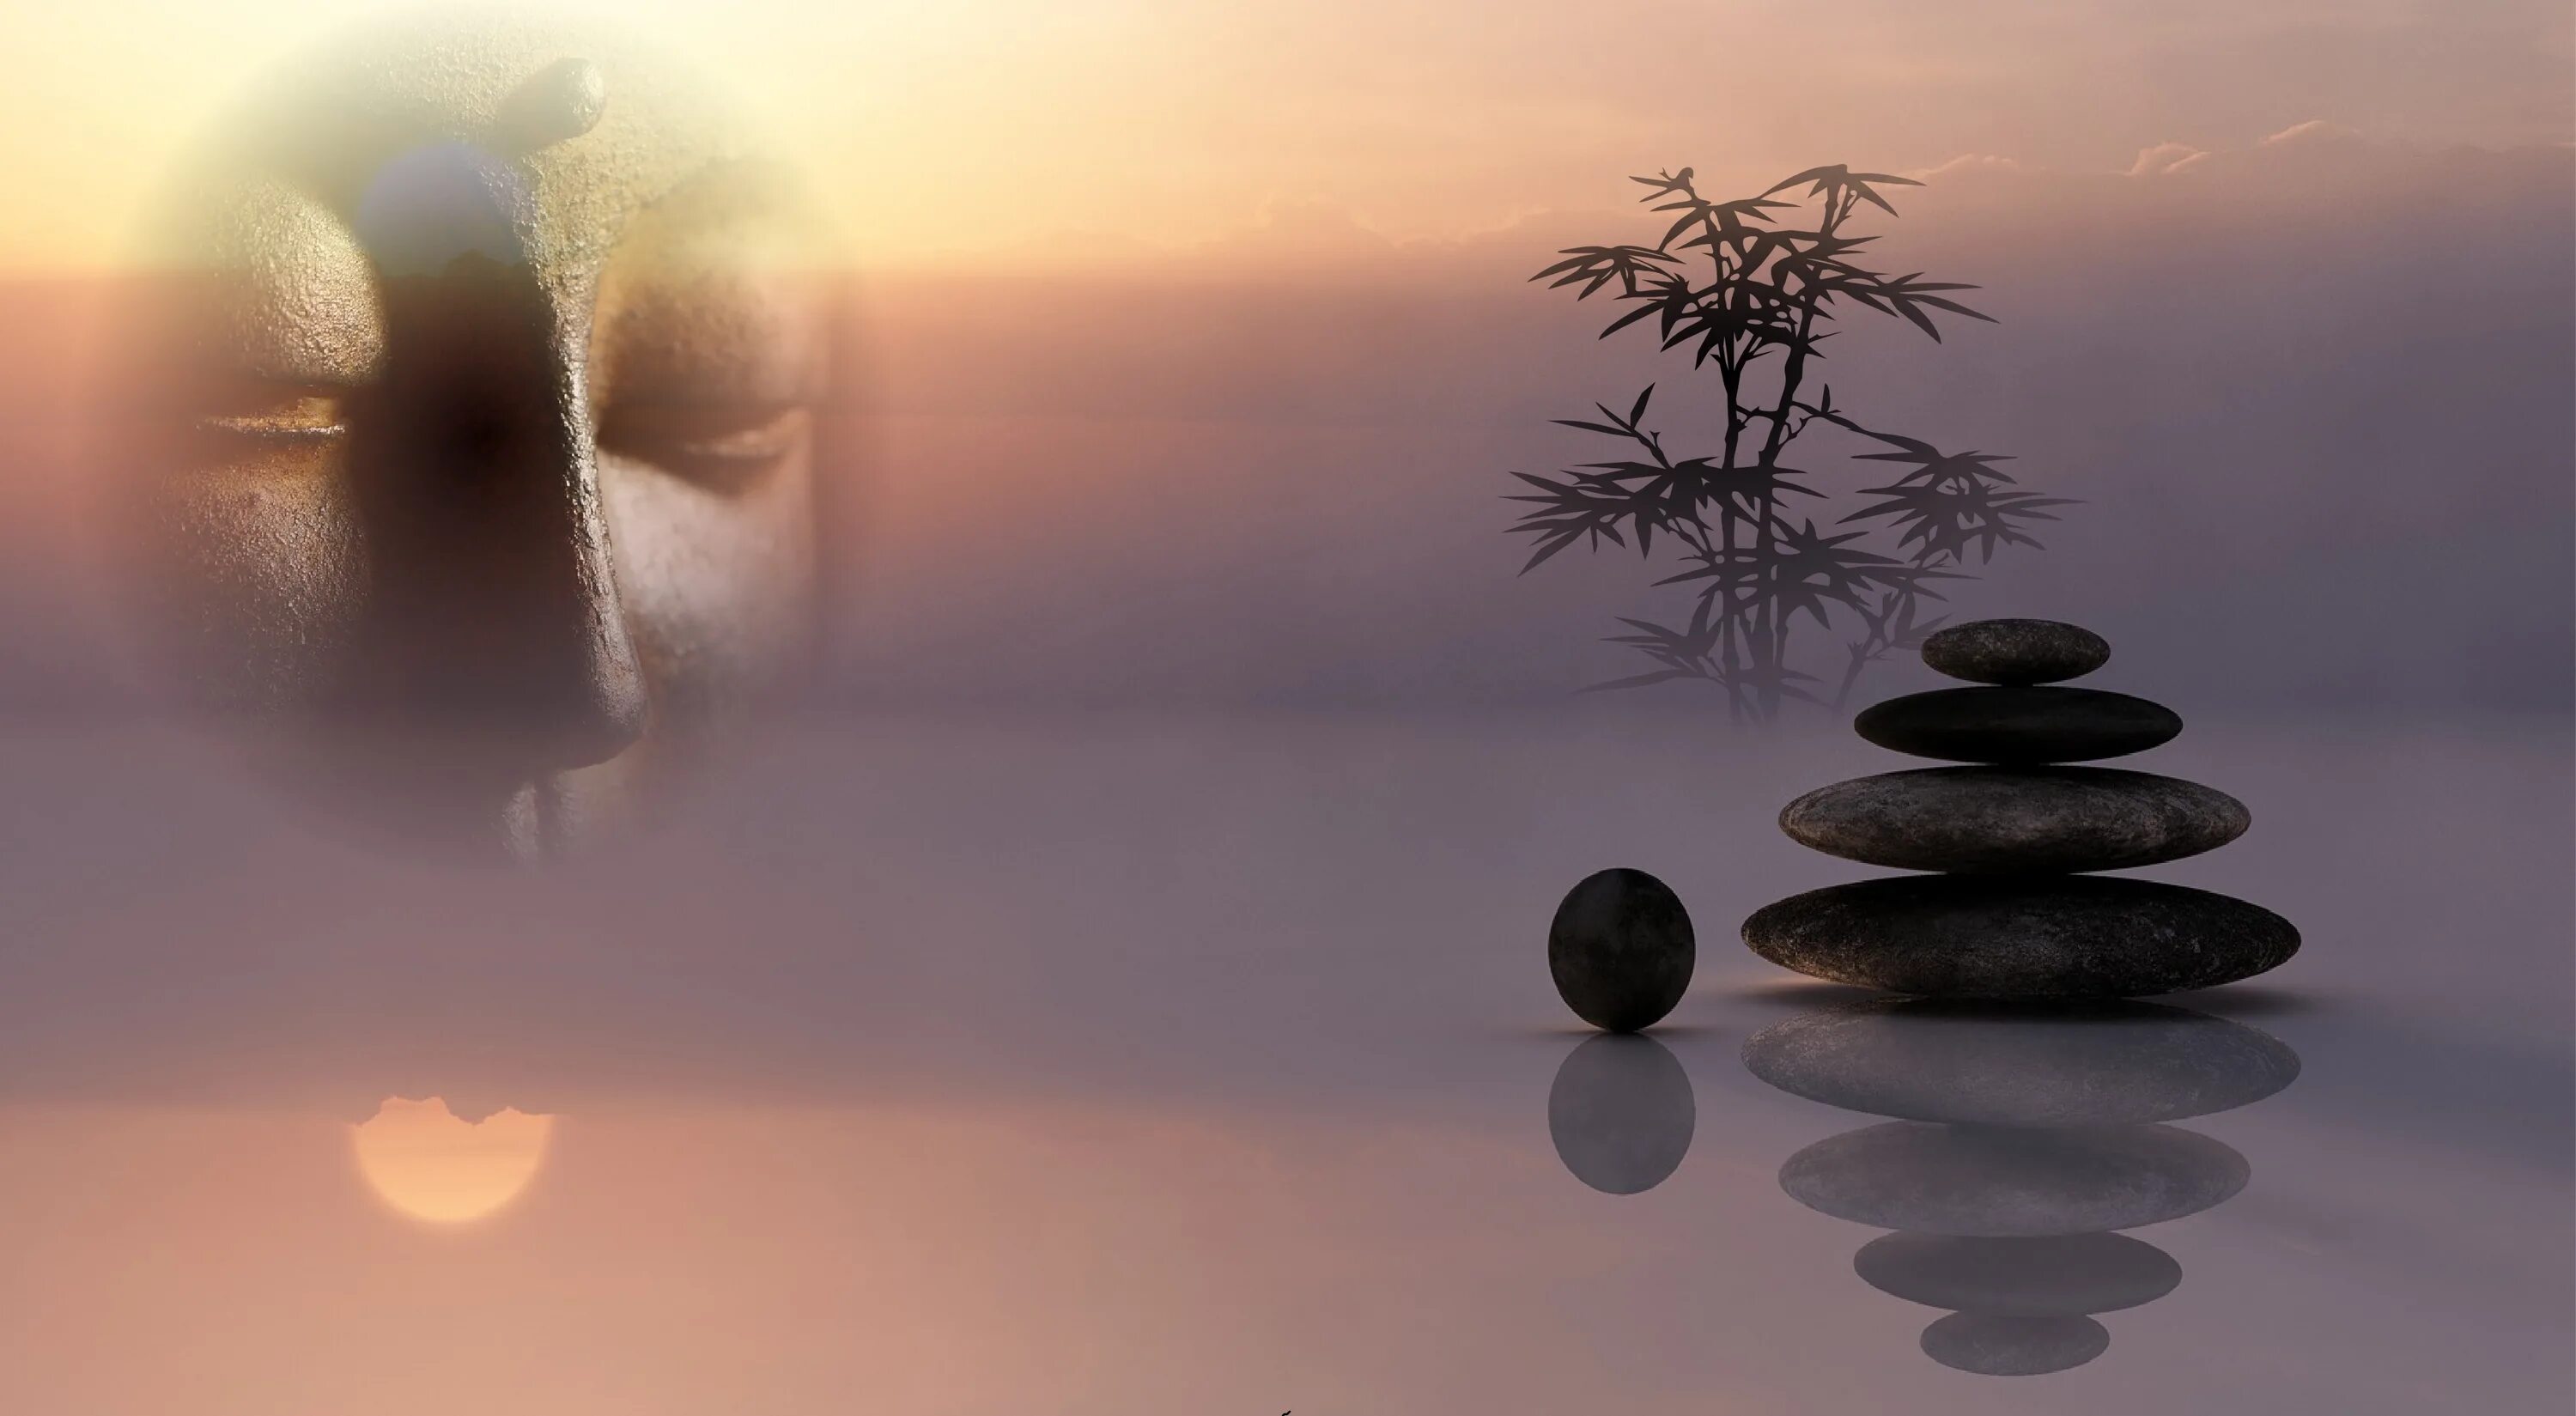 Дзен спокойствие. Дзен медитация. Бог спокойствия и умиротворения. Гармония и равновесие. Видео 4 на дзен